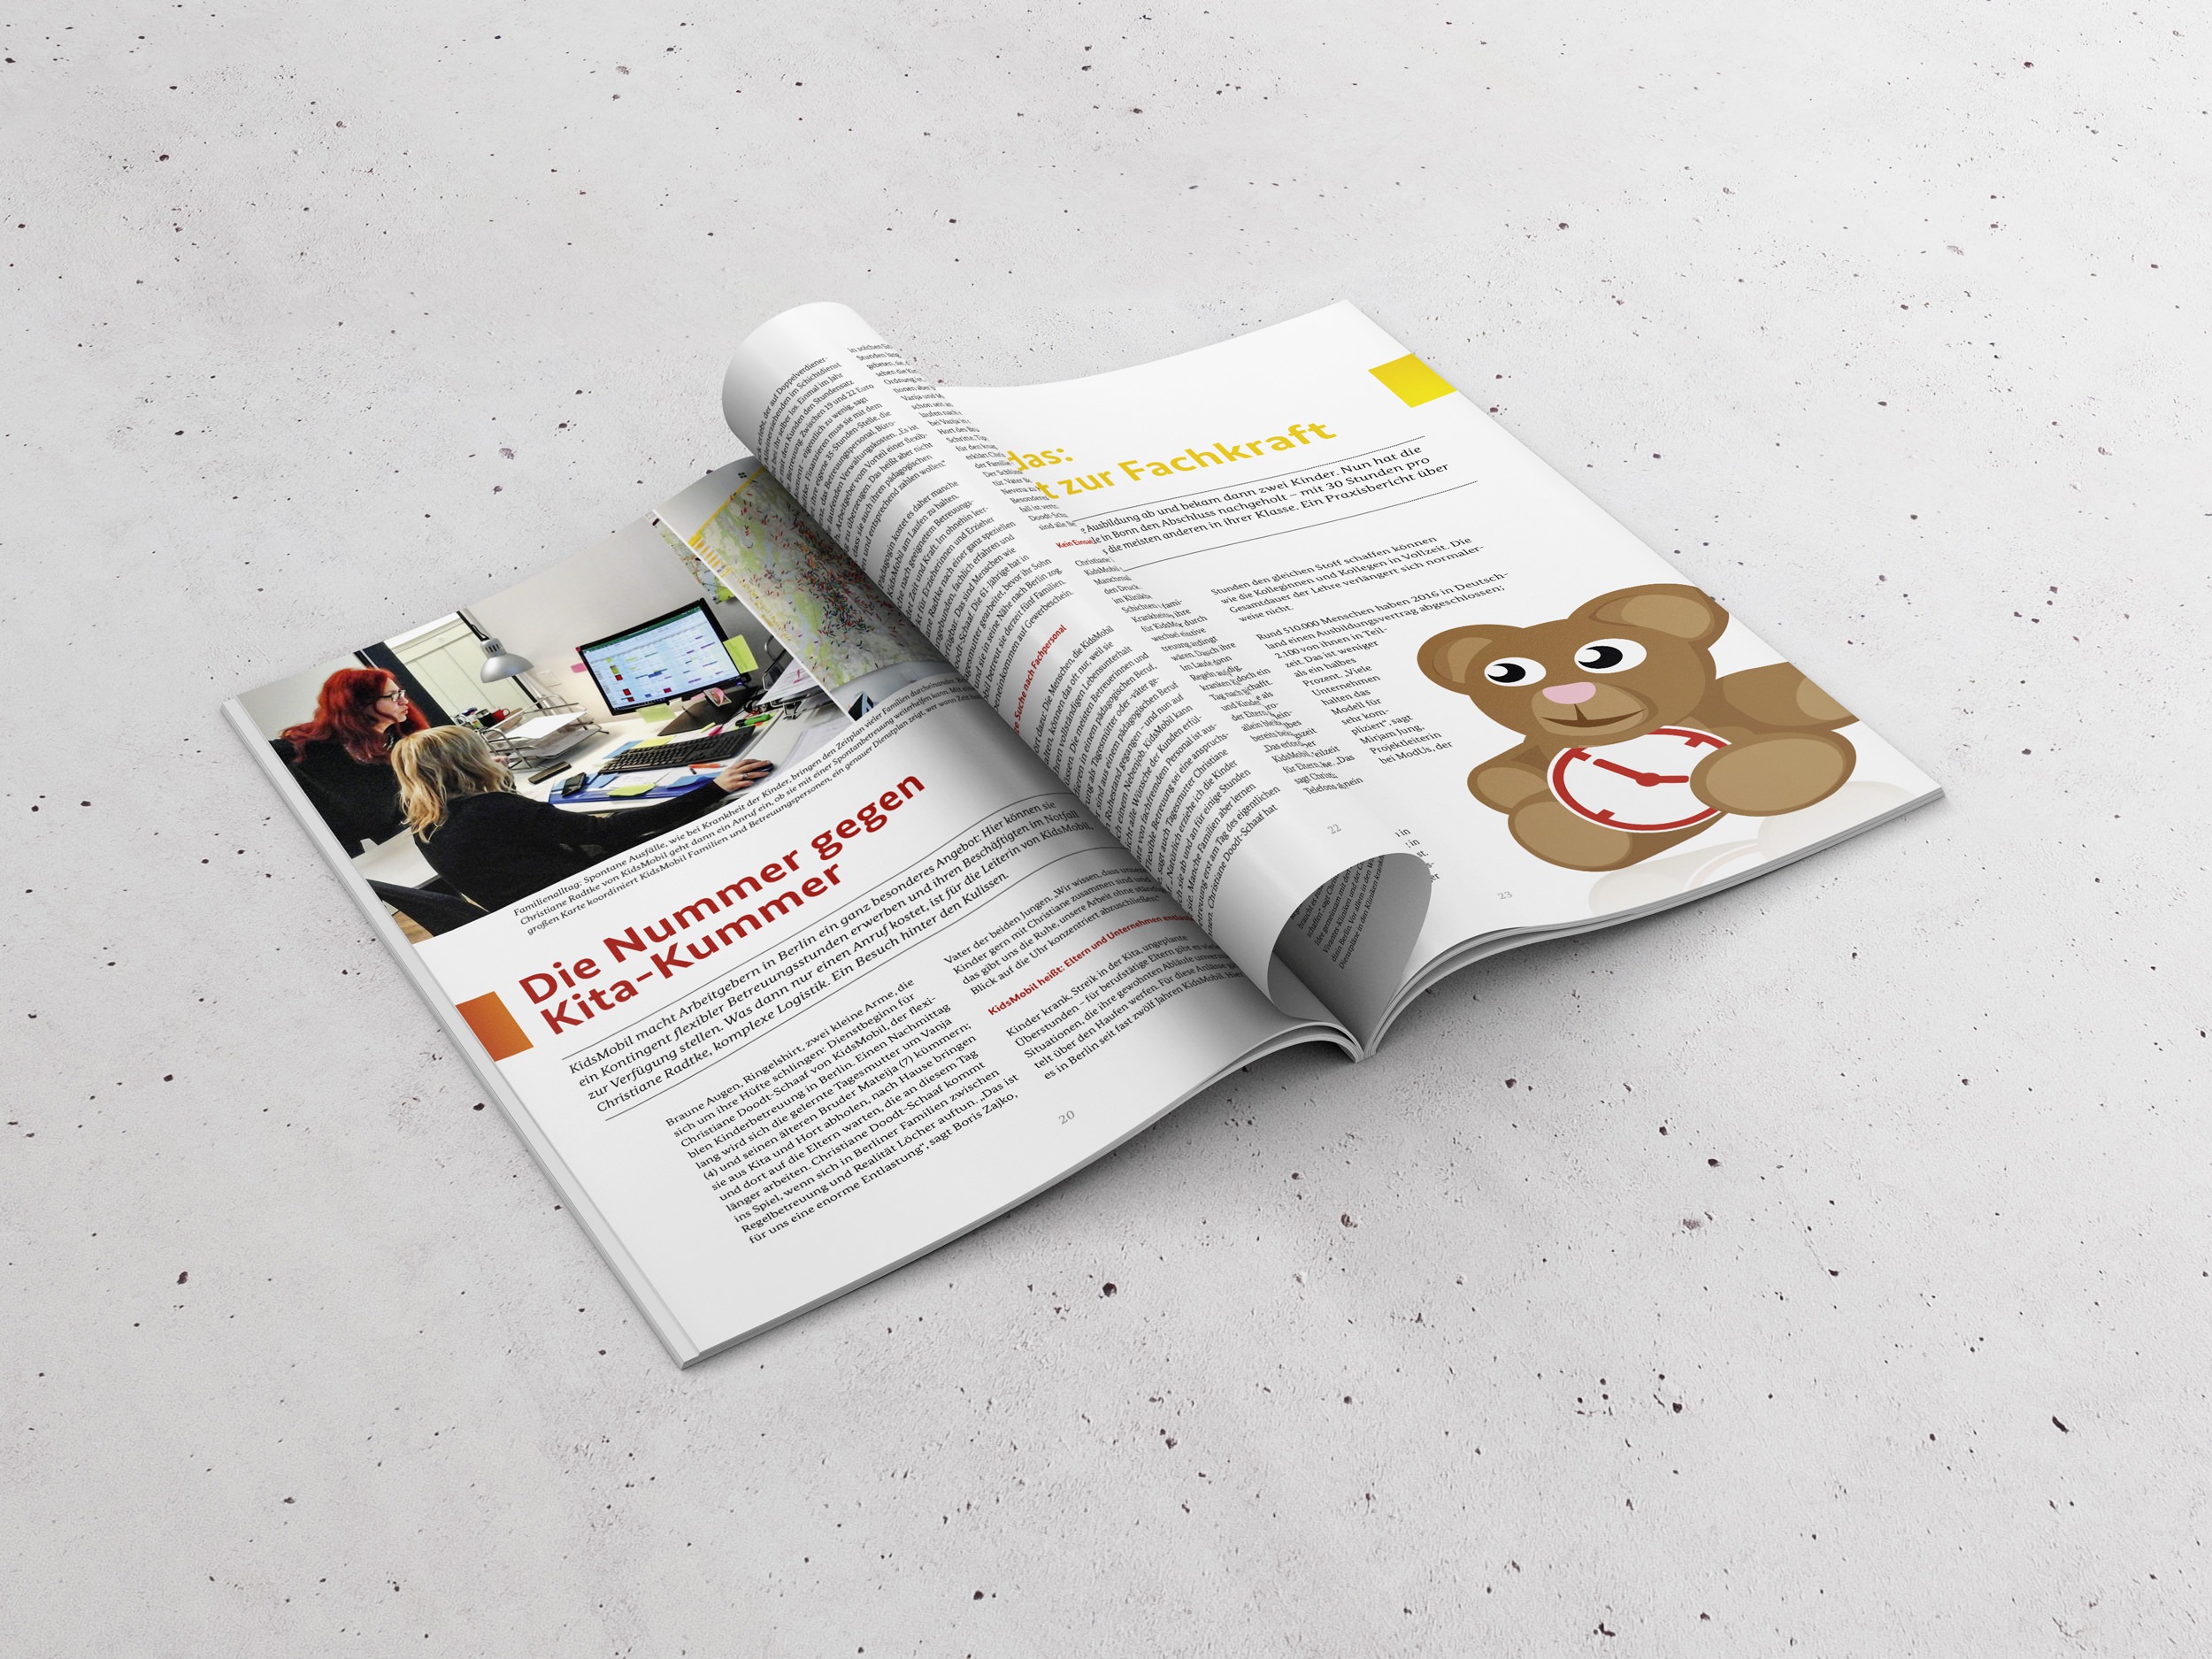 BMFSFJ – Erfolgsfaktor Familie – Magazin "Geht doch!" | Editorial Design / Corporate Publishing